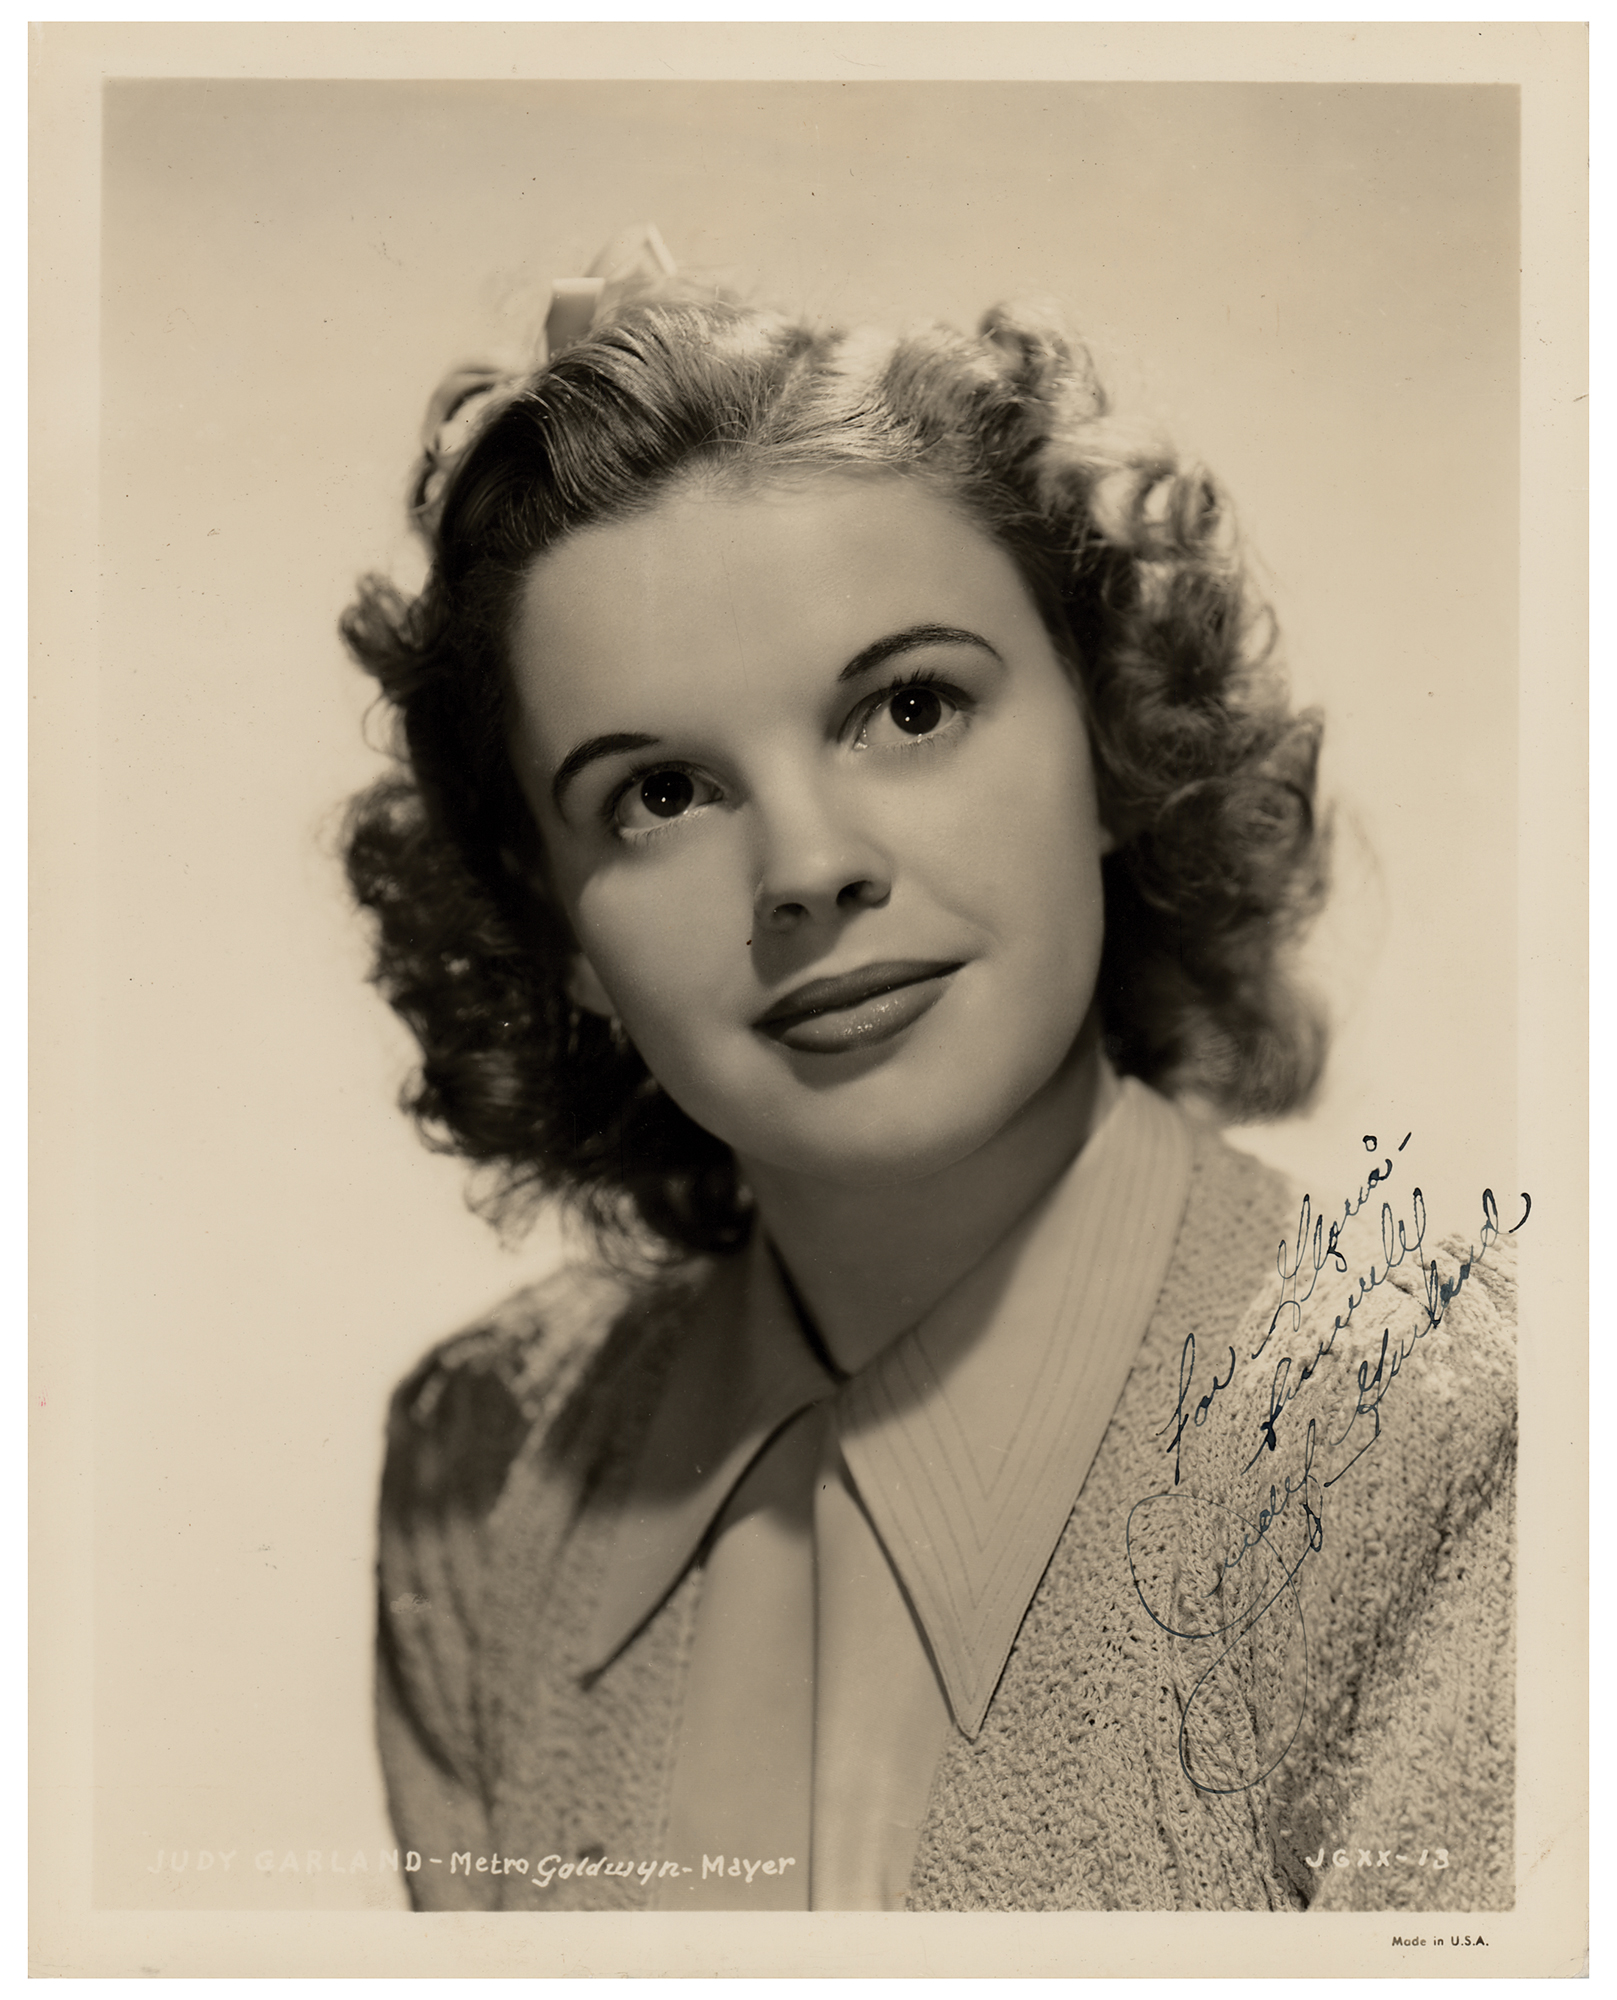 Lot #5013 Judy Garland Signed Photograph